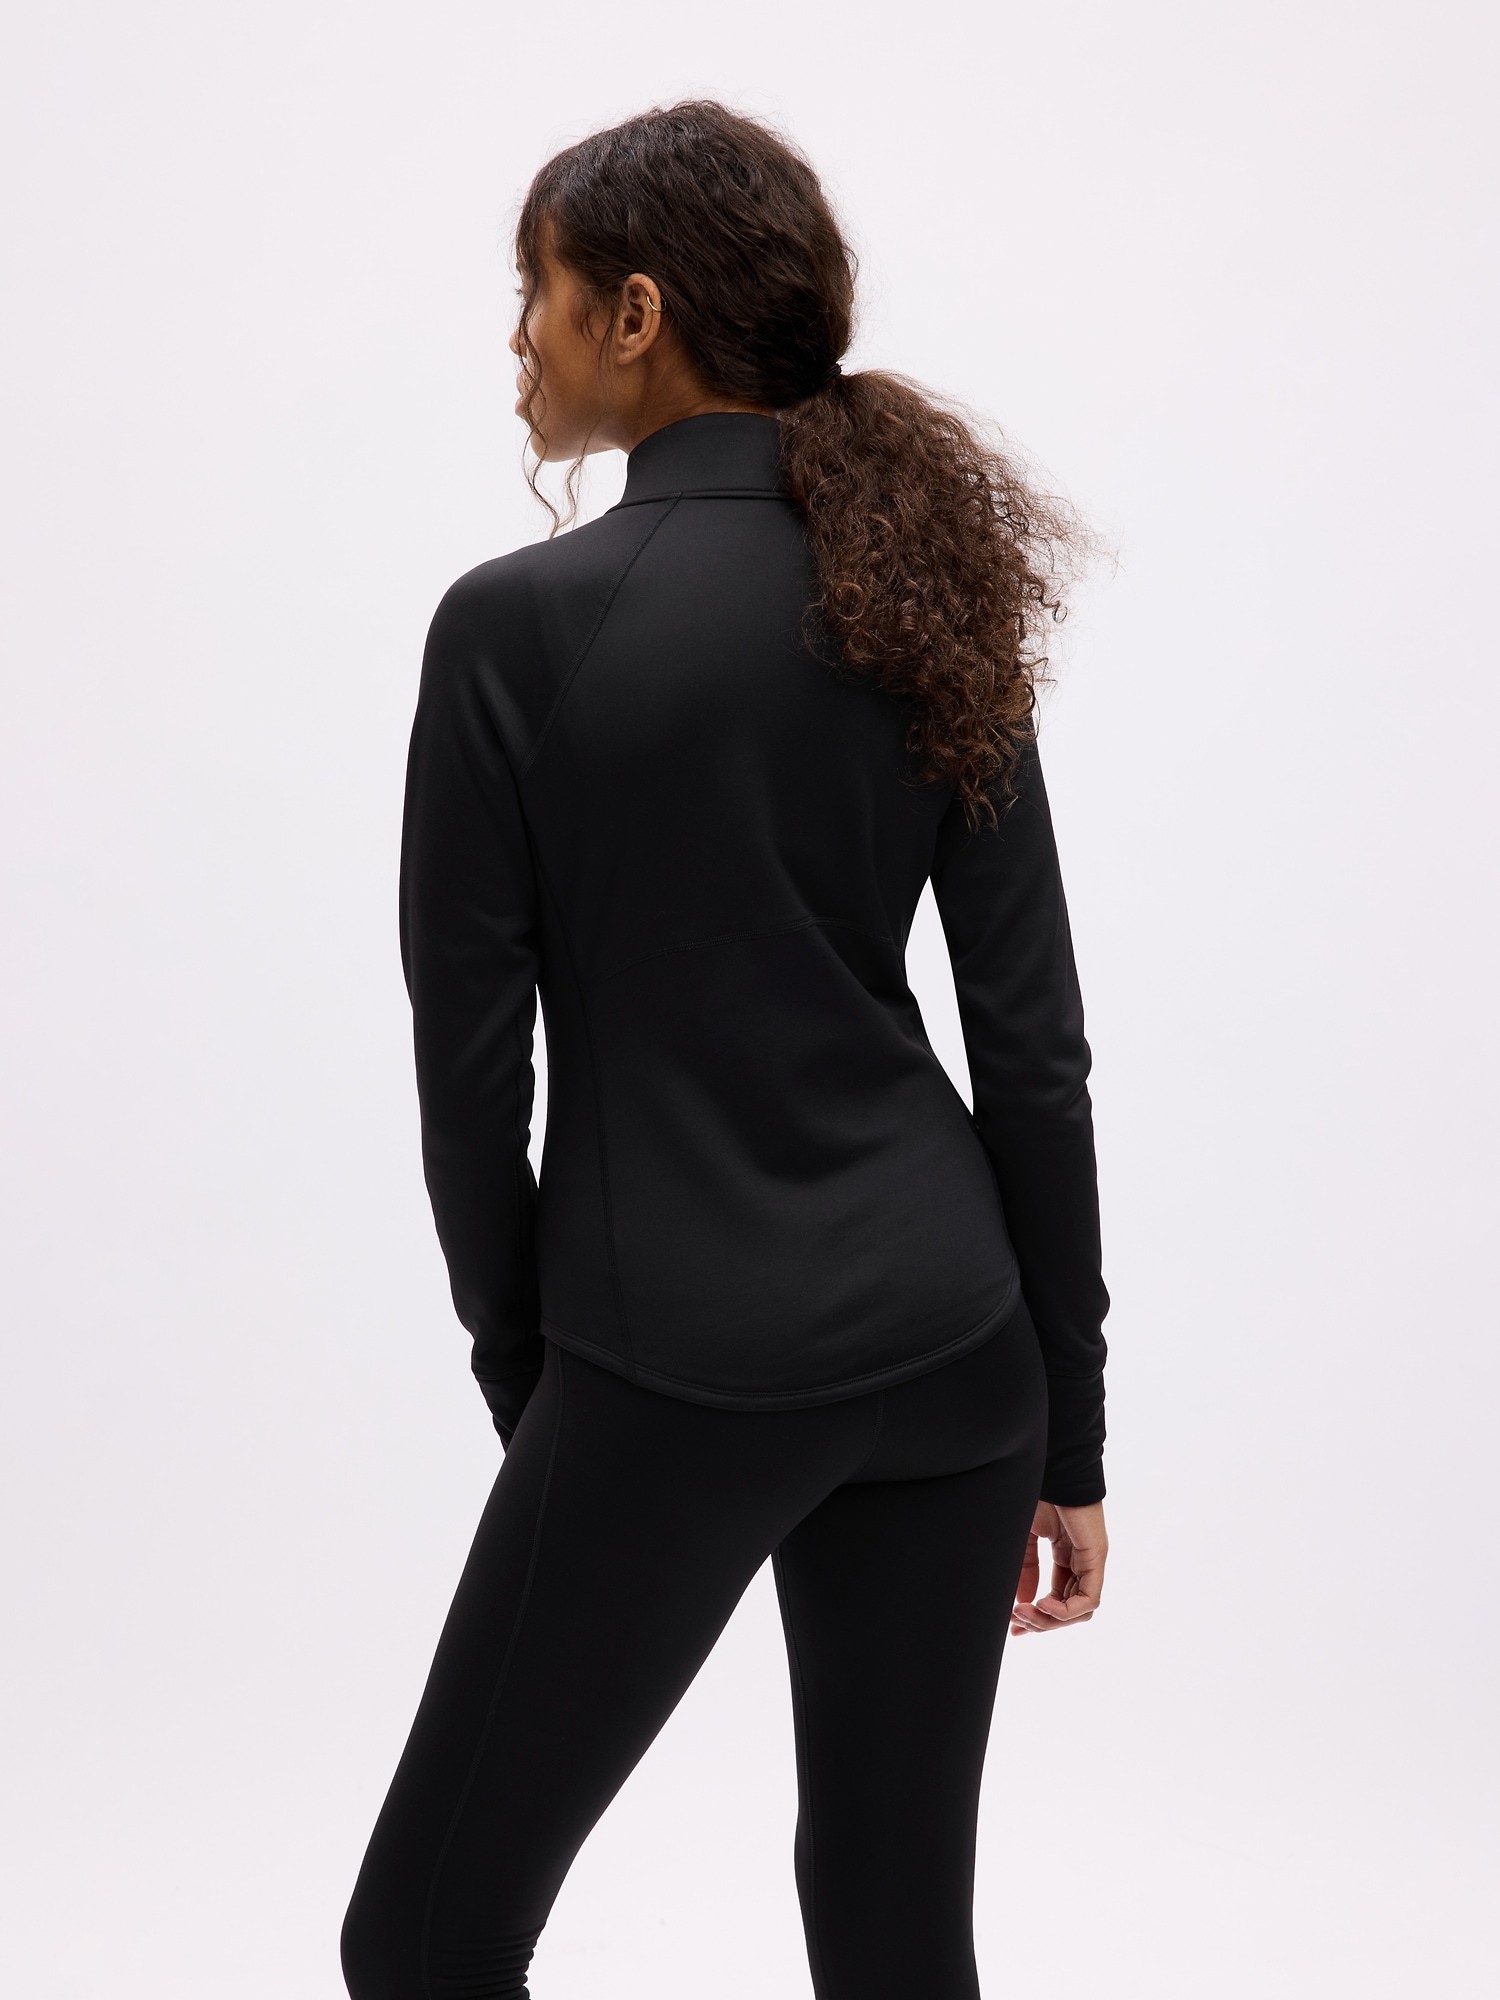 GapFit - Black Activewear Jacket Spandex Nylon